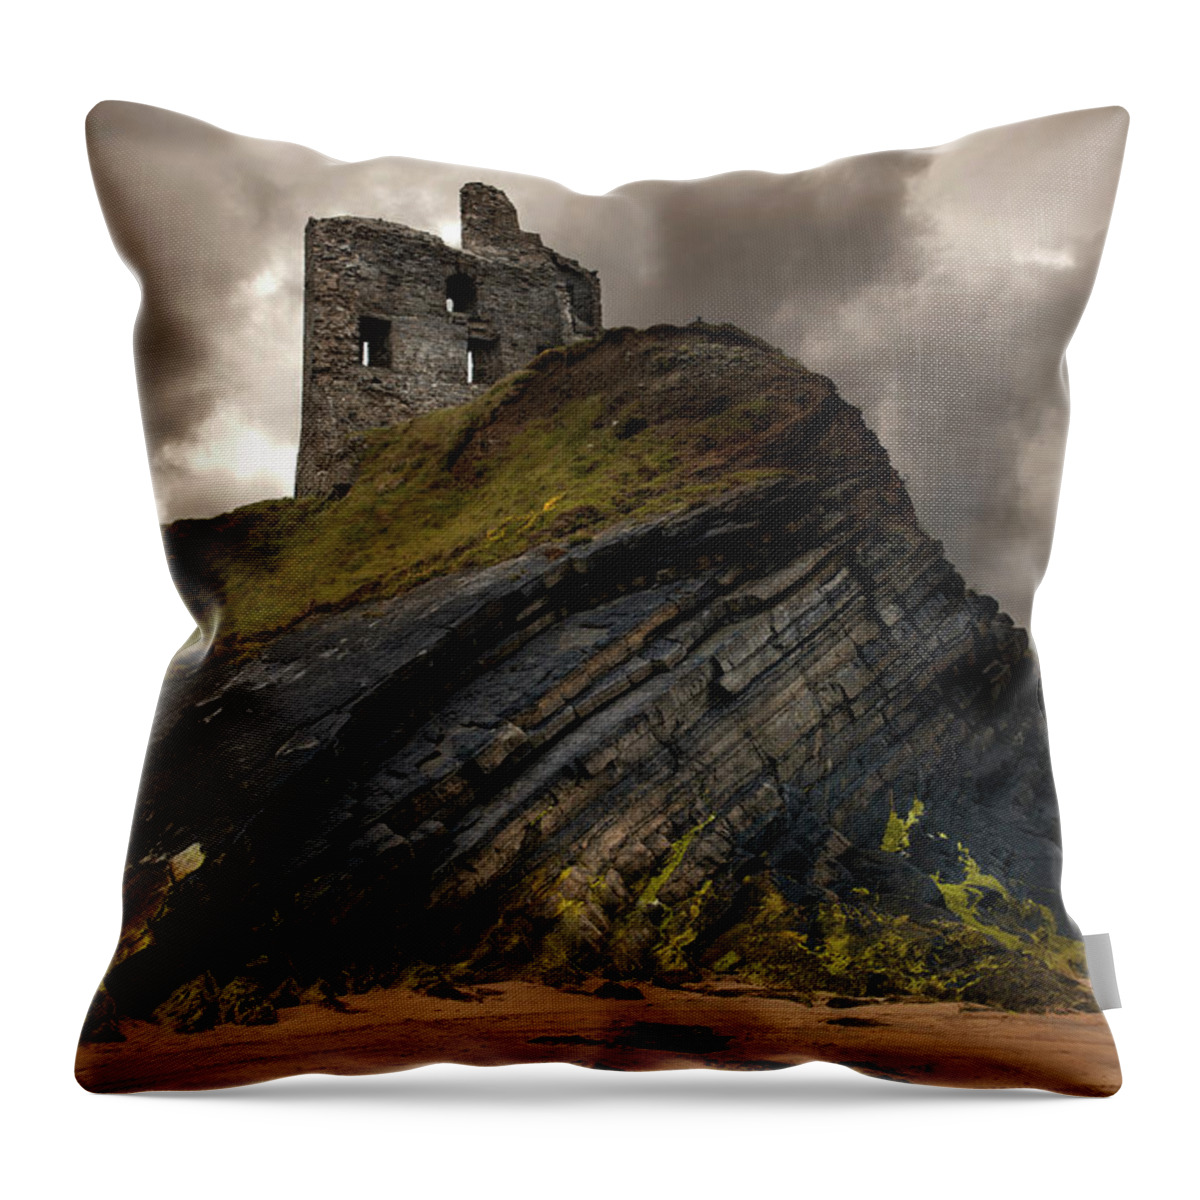 Ballybunion Throw Pillow featuring the photograph Forgotten Castle in Ballybunion by Jaroslaw Blaminsky